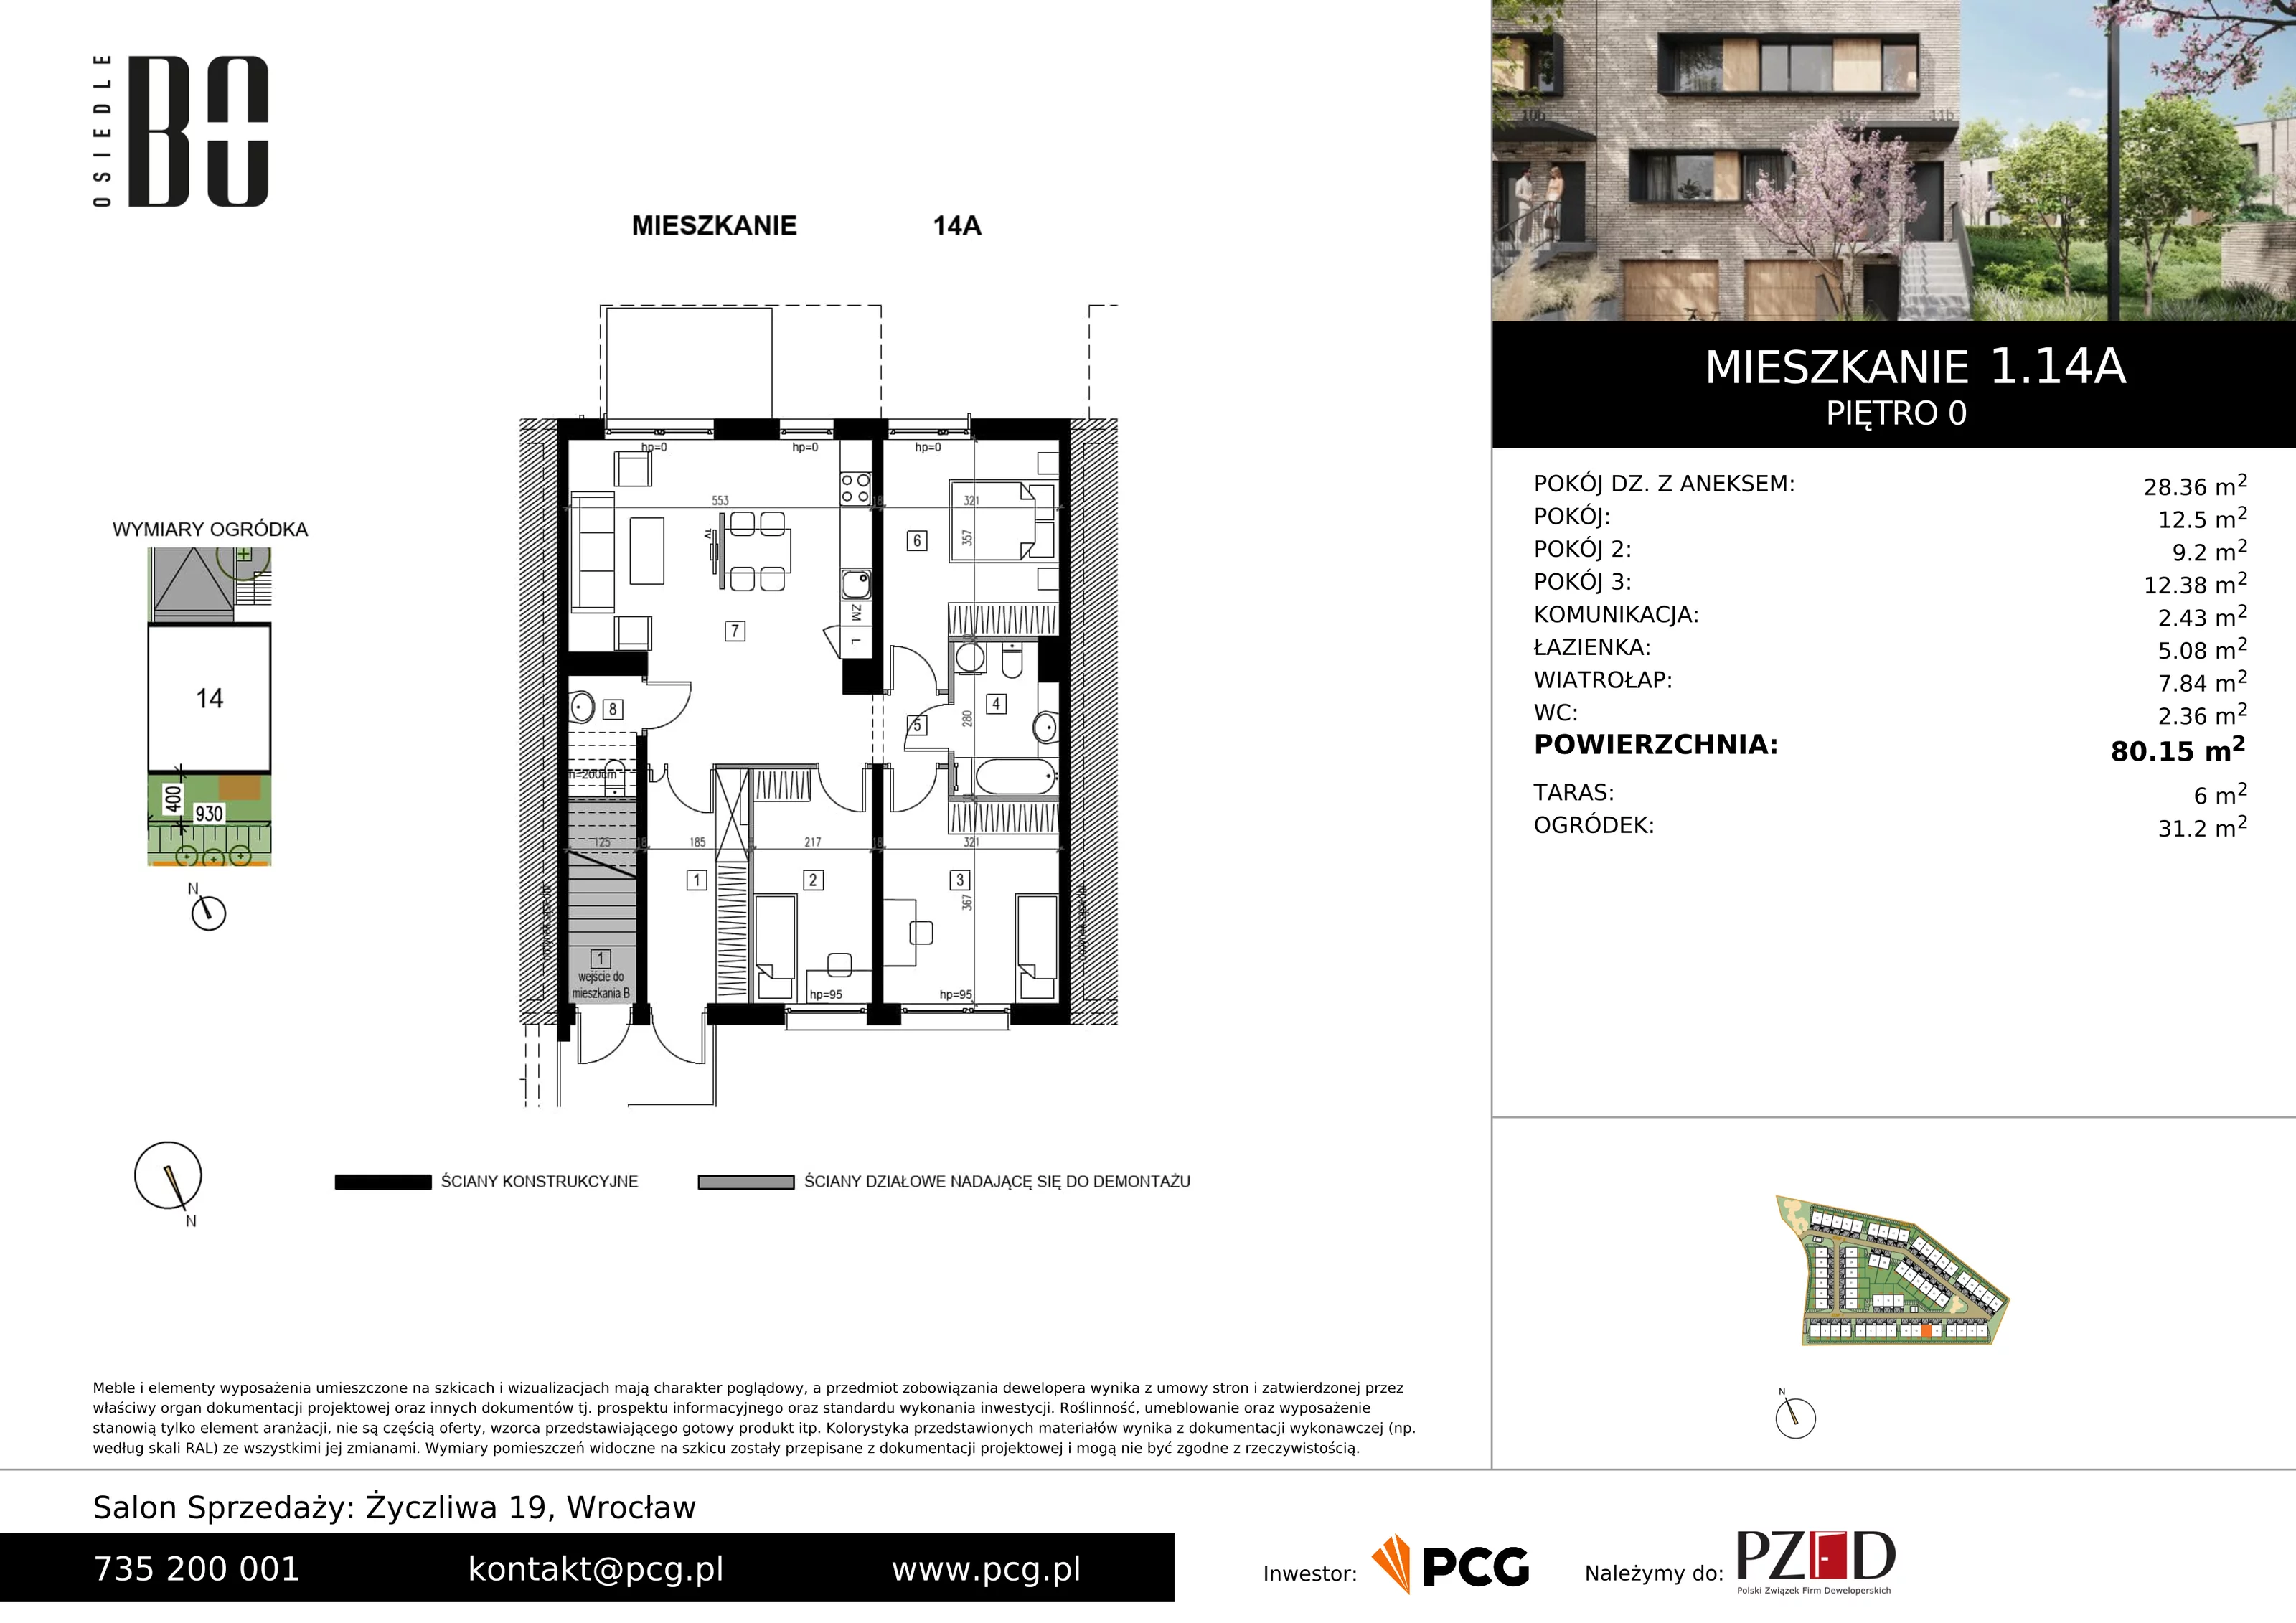 Apartament 80,15 m², parter, oferta nr 1.14A, Osiedle BO, Wrocław, Kowale, ul. Bociana